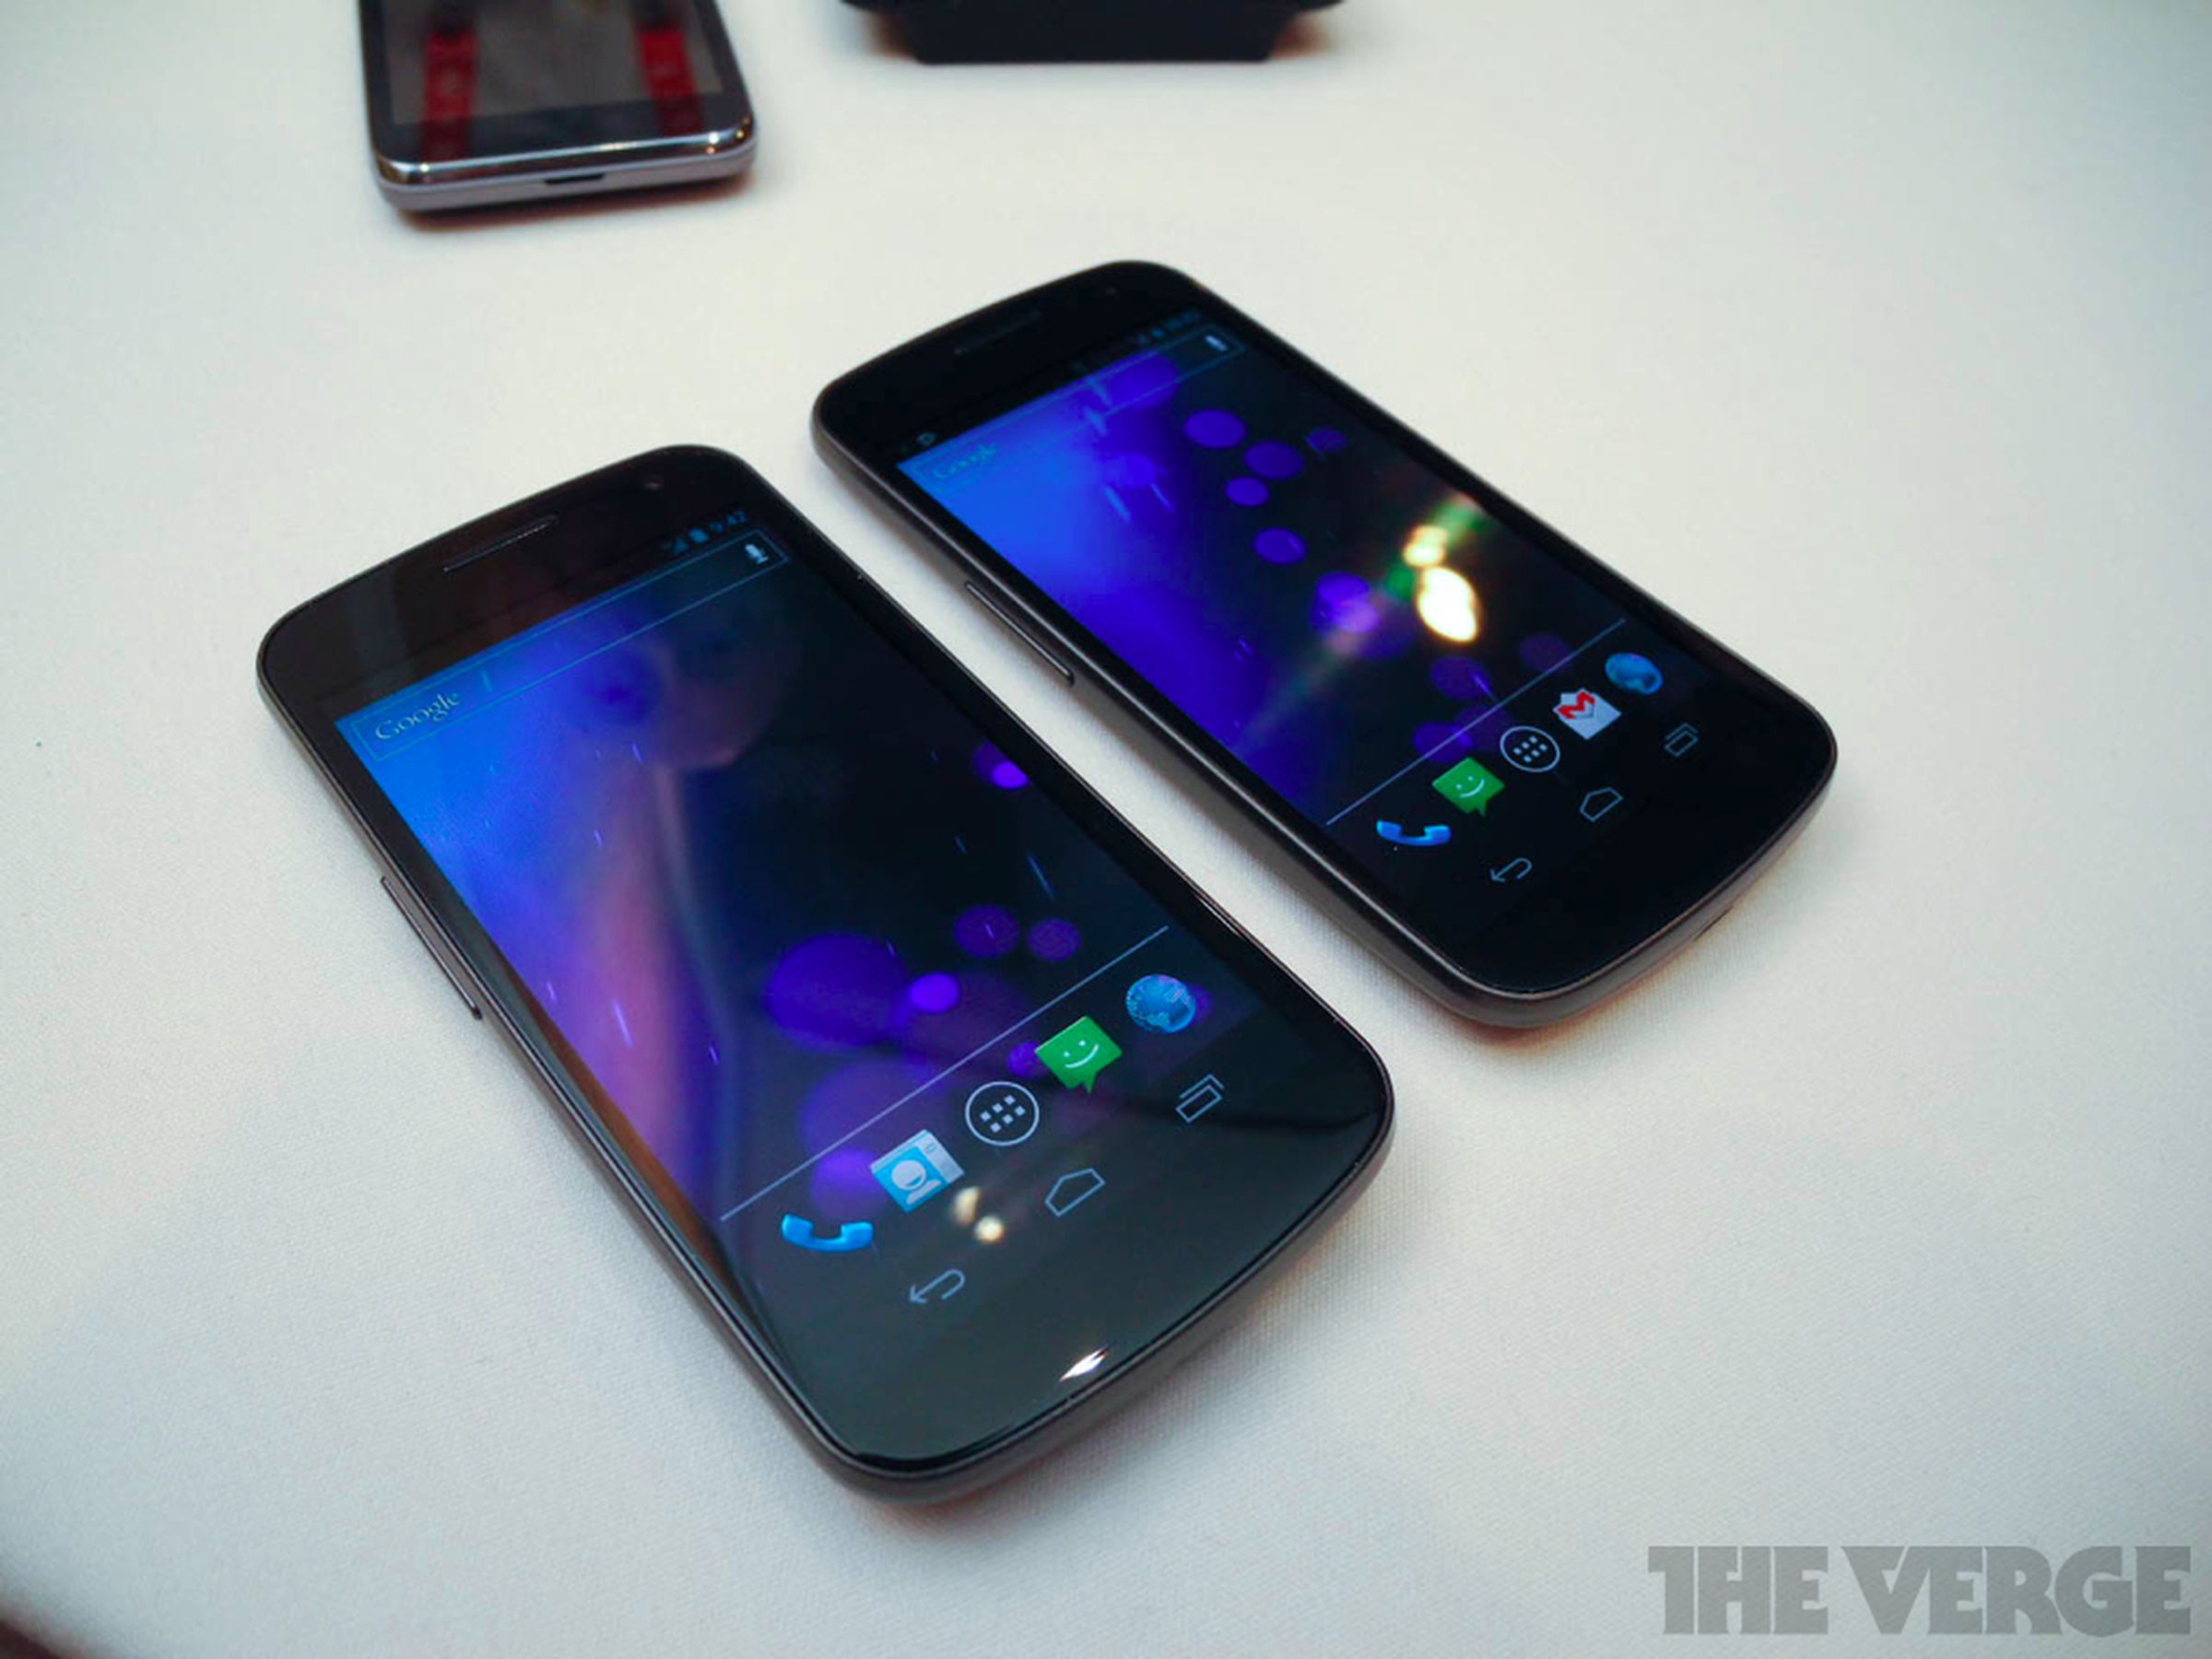 Sprint Galaxy Nexus, LG Viper, and Tri-Network Hotspot hands-on